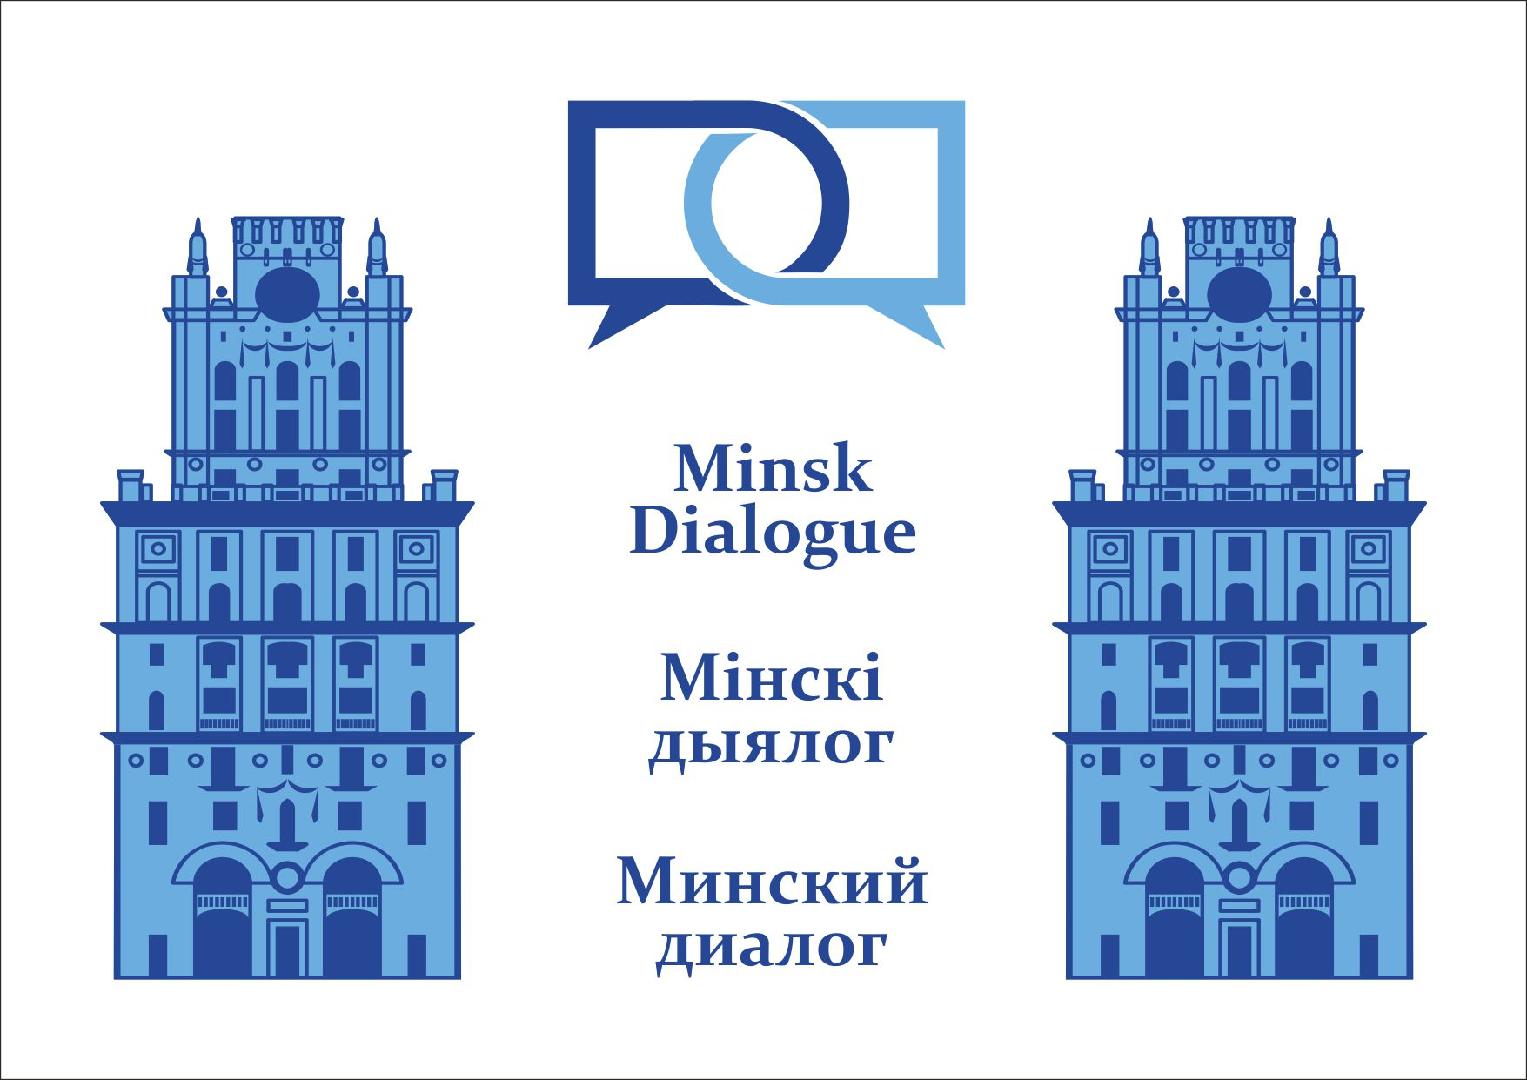 Minsk Dialogue Initiative